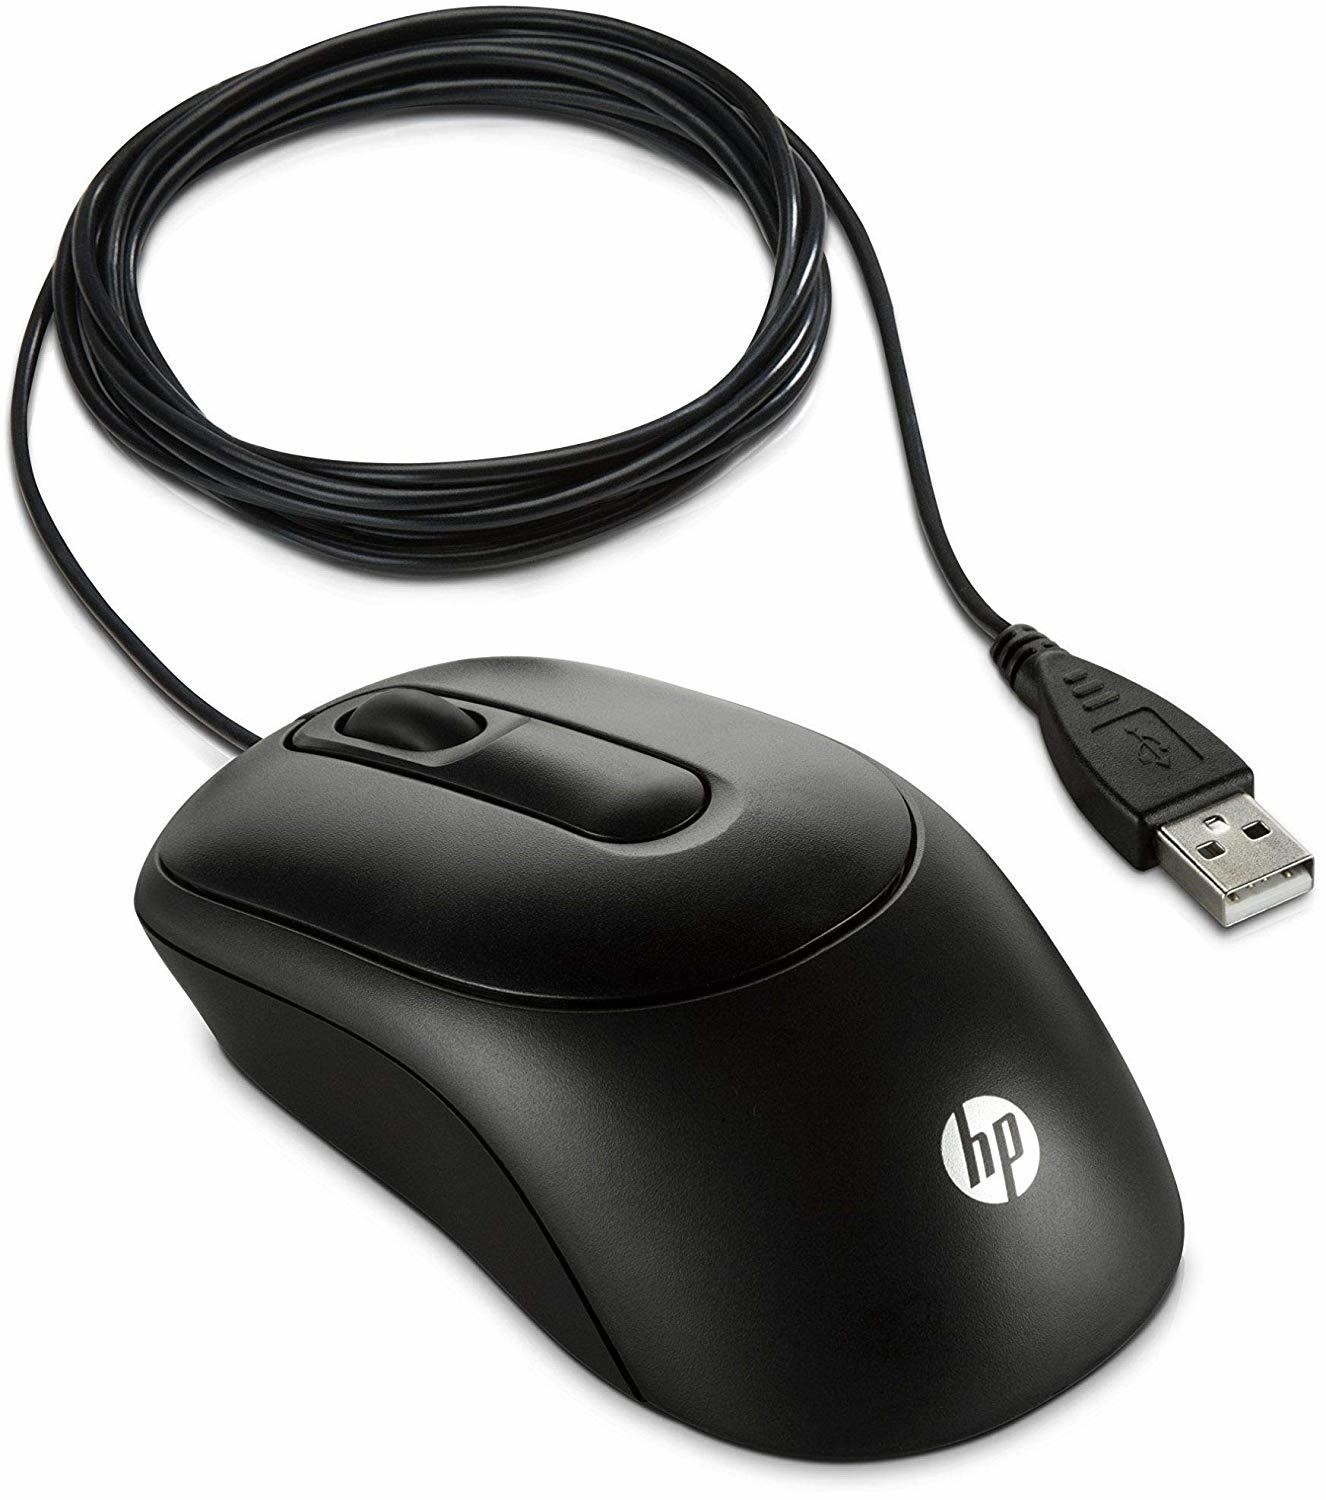 HP X900 Optical USB Mouse